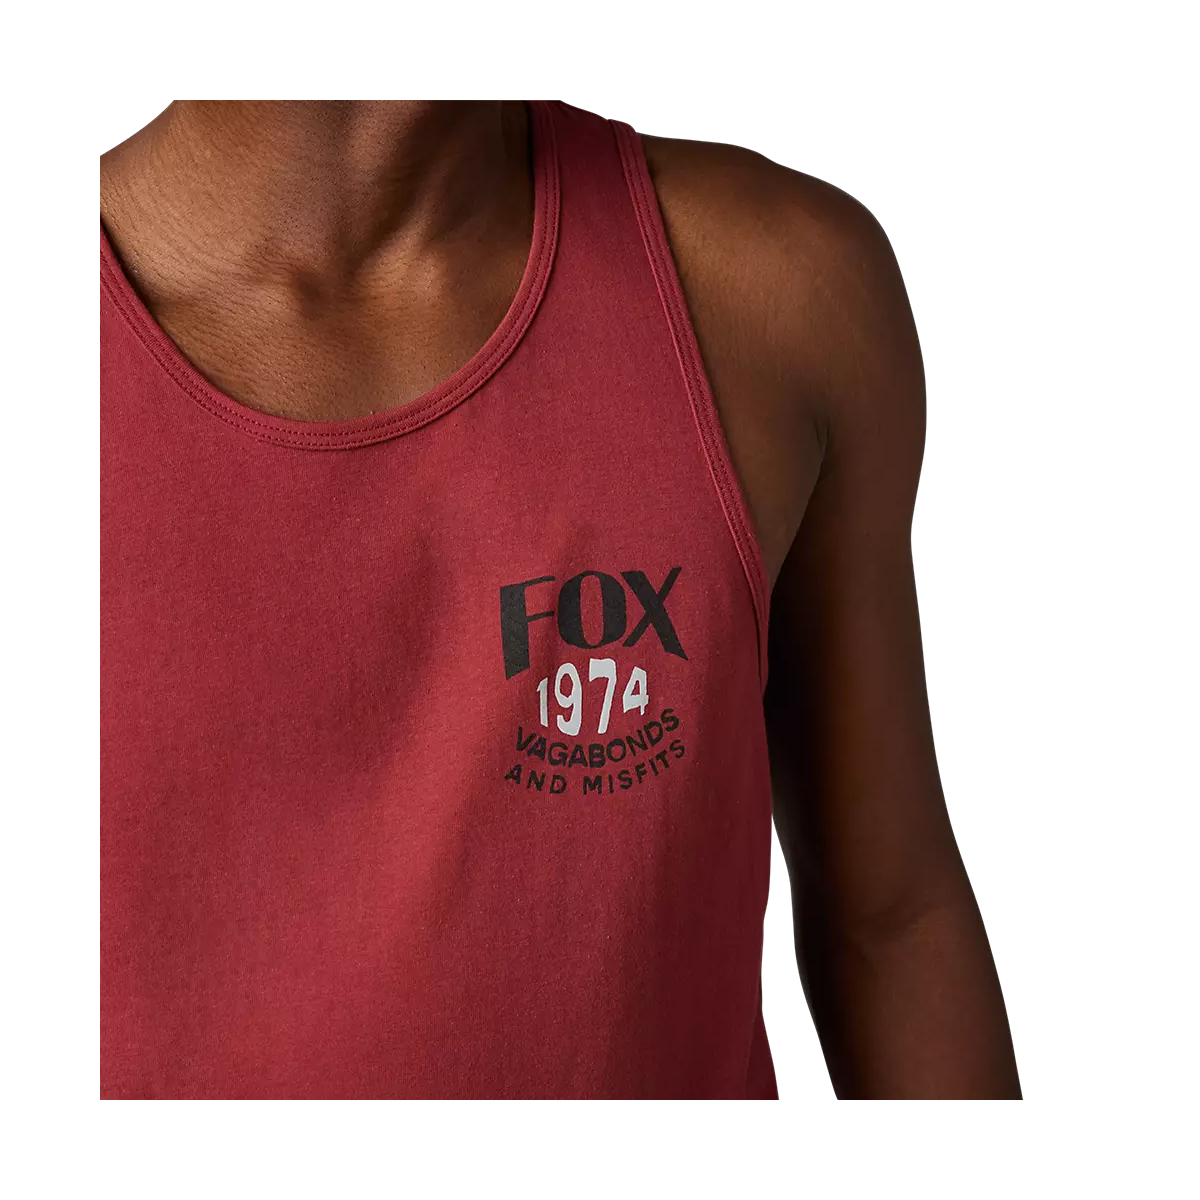 logo delantero fox 1974 de Camiseta sin mangas Fox PREMIUM Predominant COLOR rojo de calle tipo casual 30560-371